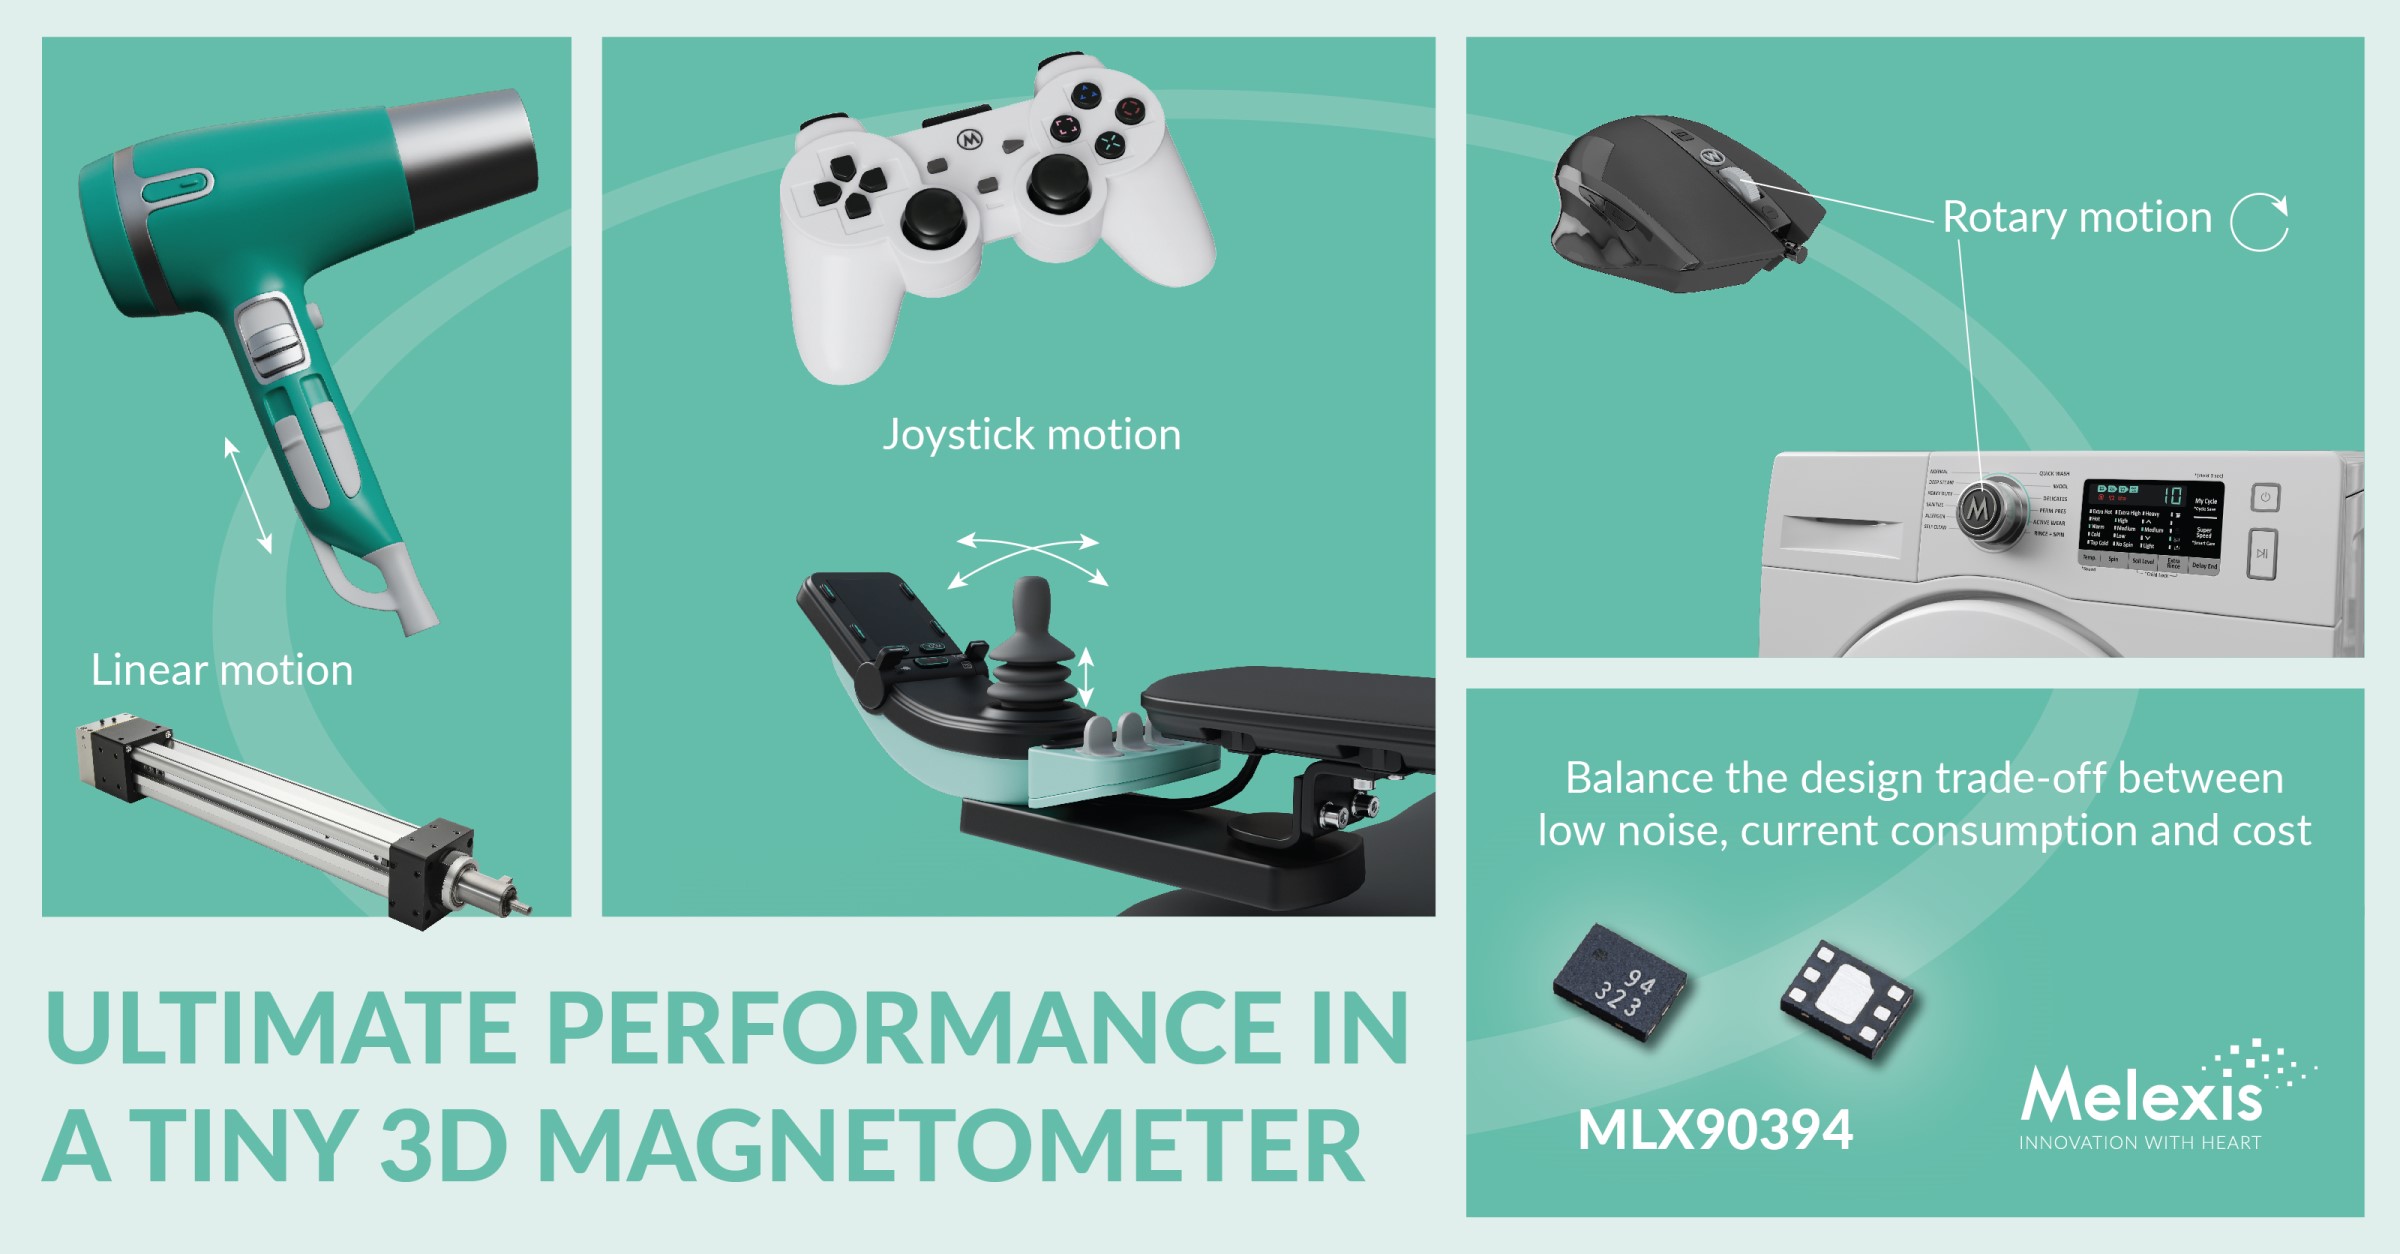 Melexis推出新款微型3D磁力計，拓展性能極限